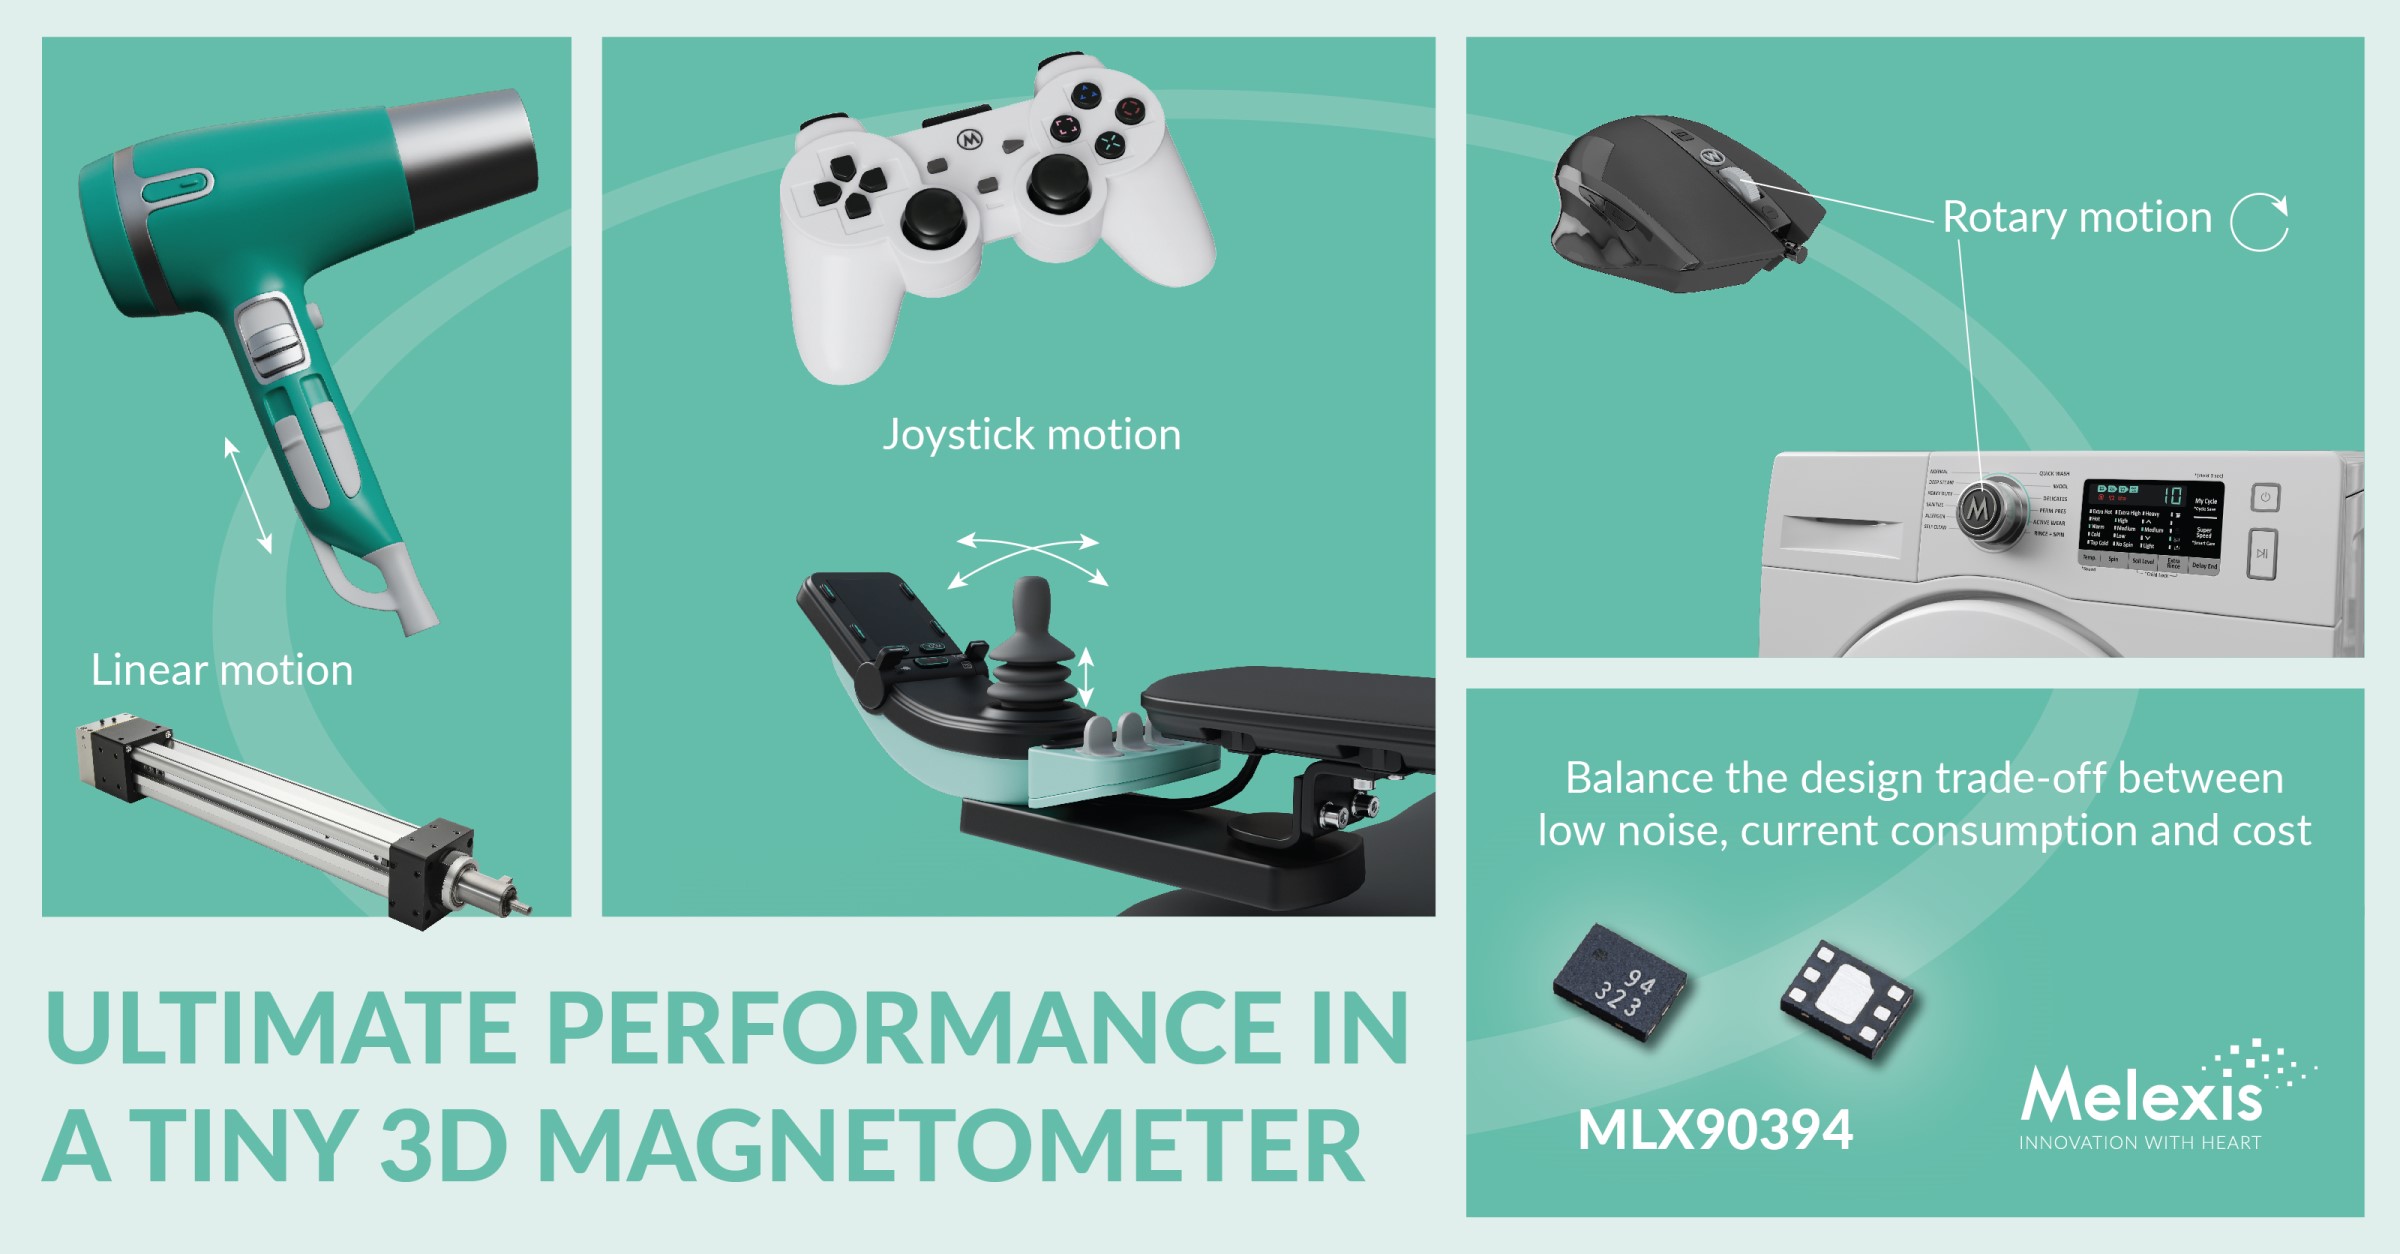 Melexis推出新款微型3D磁力計，拓展性能極限